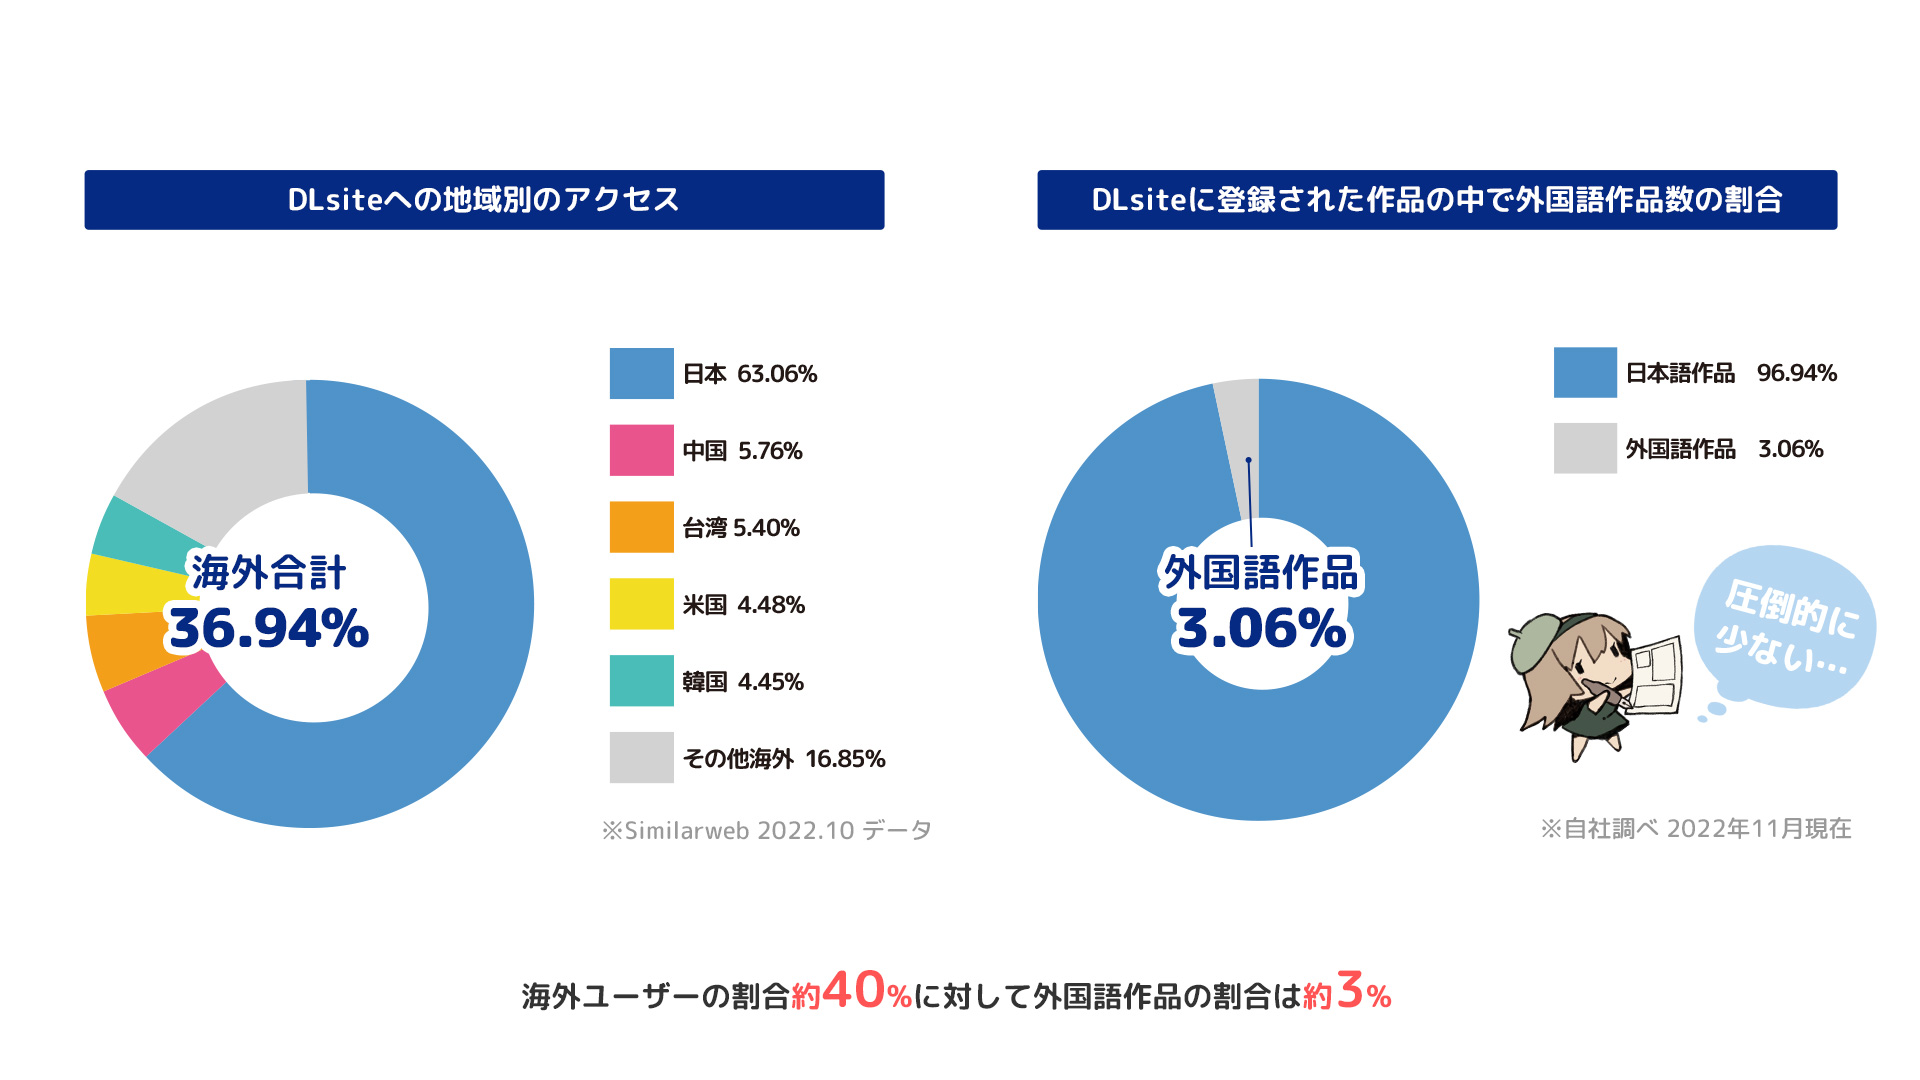 DLsite海外ユーザーの割合約40％に対して外国語作品の割合は約3%